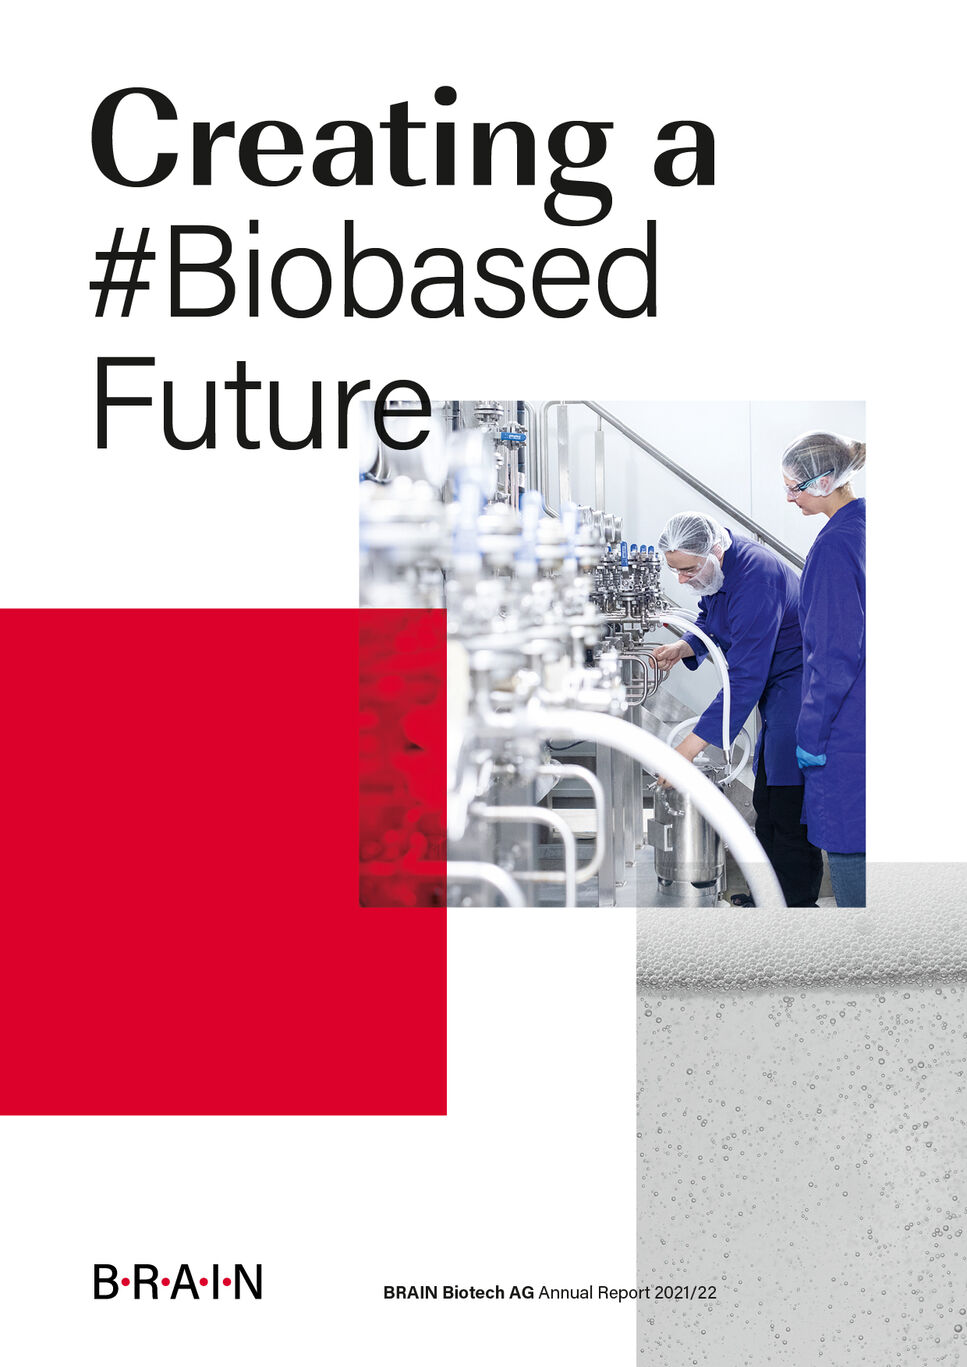 BRAIN Biotech AG Annual Report 2021 22 cover